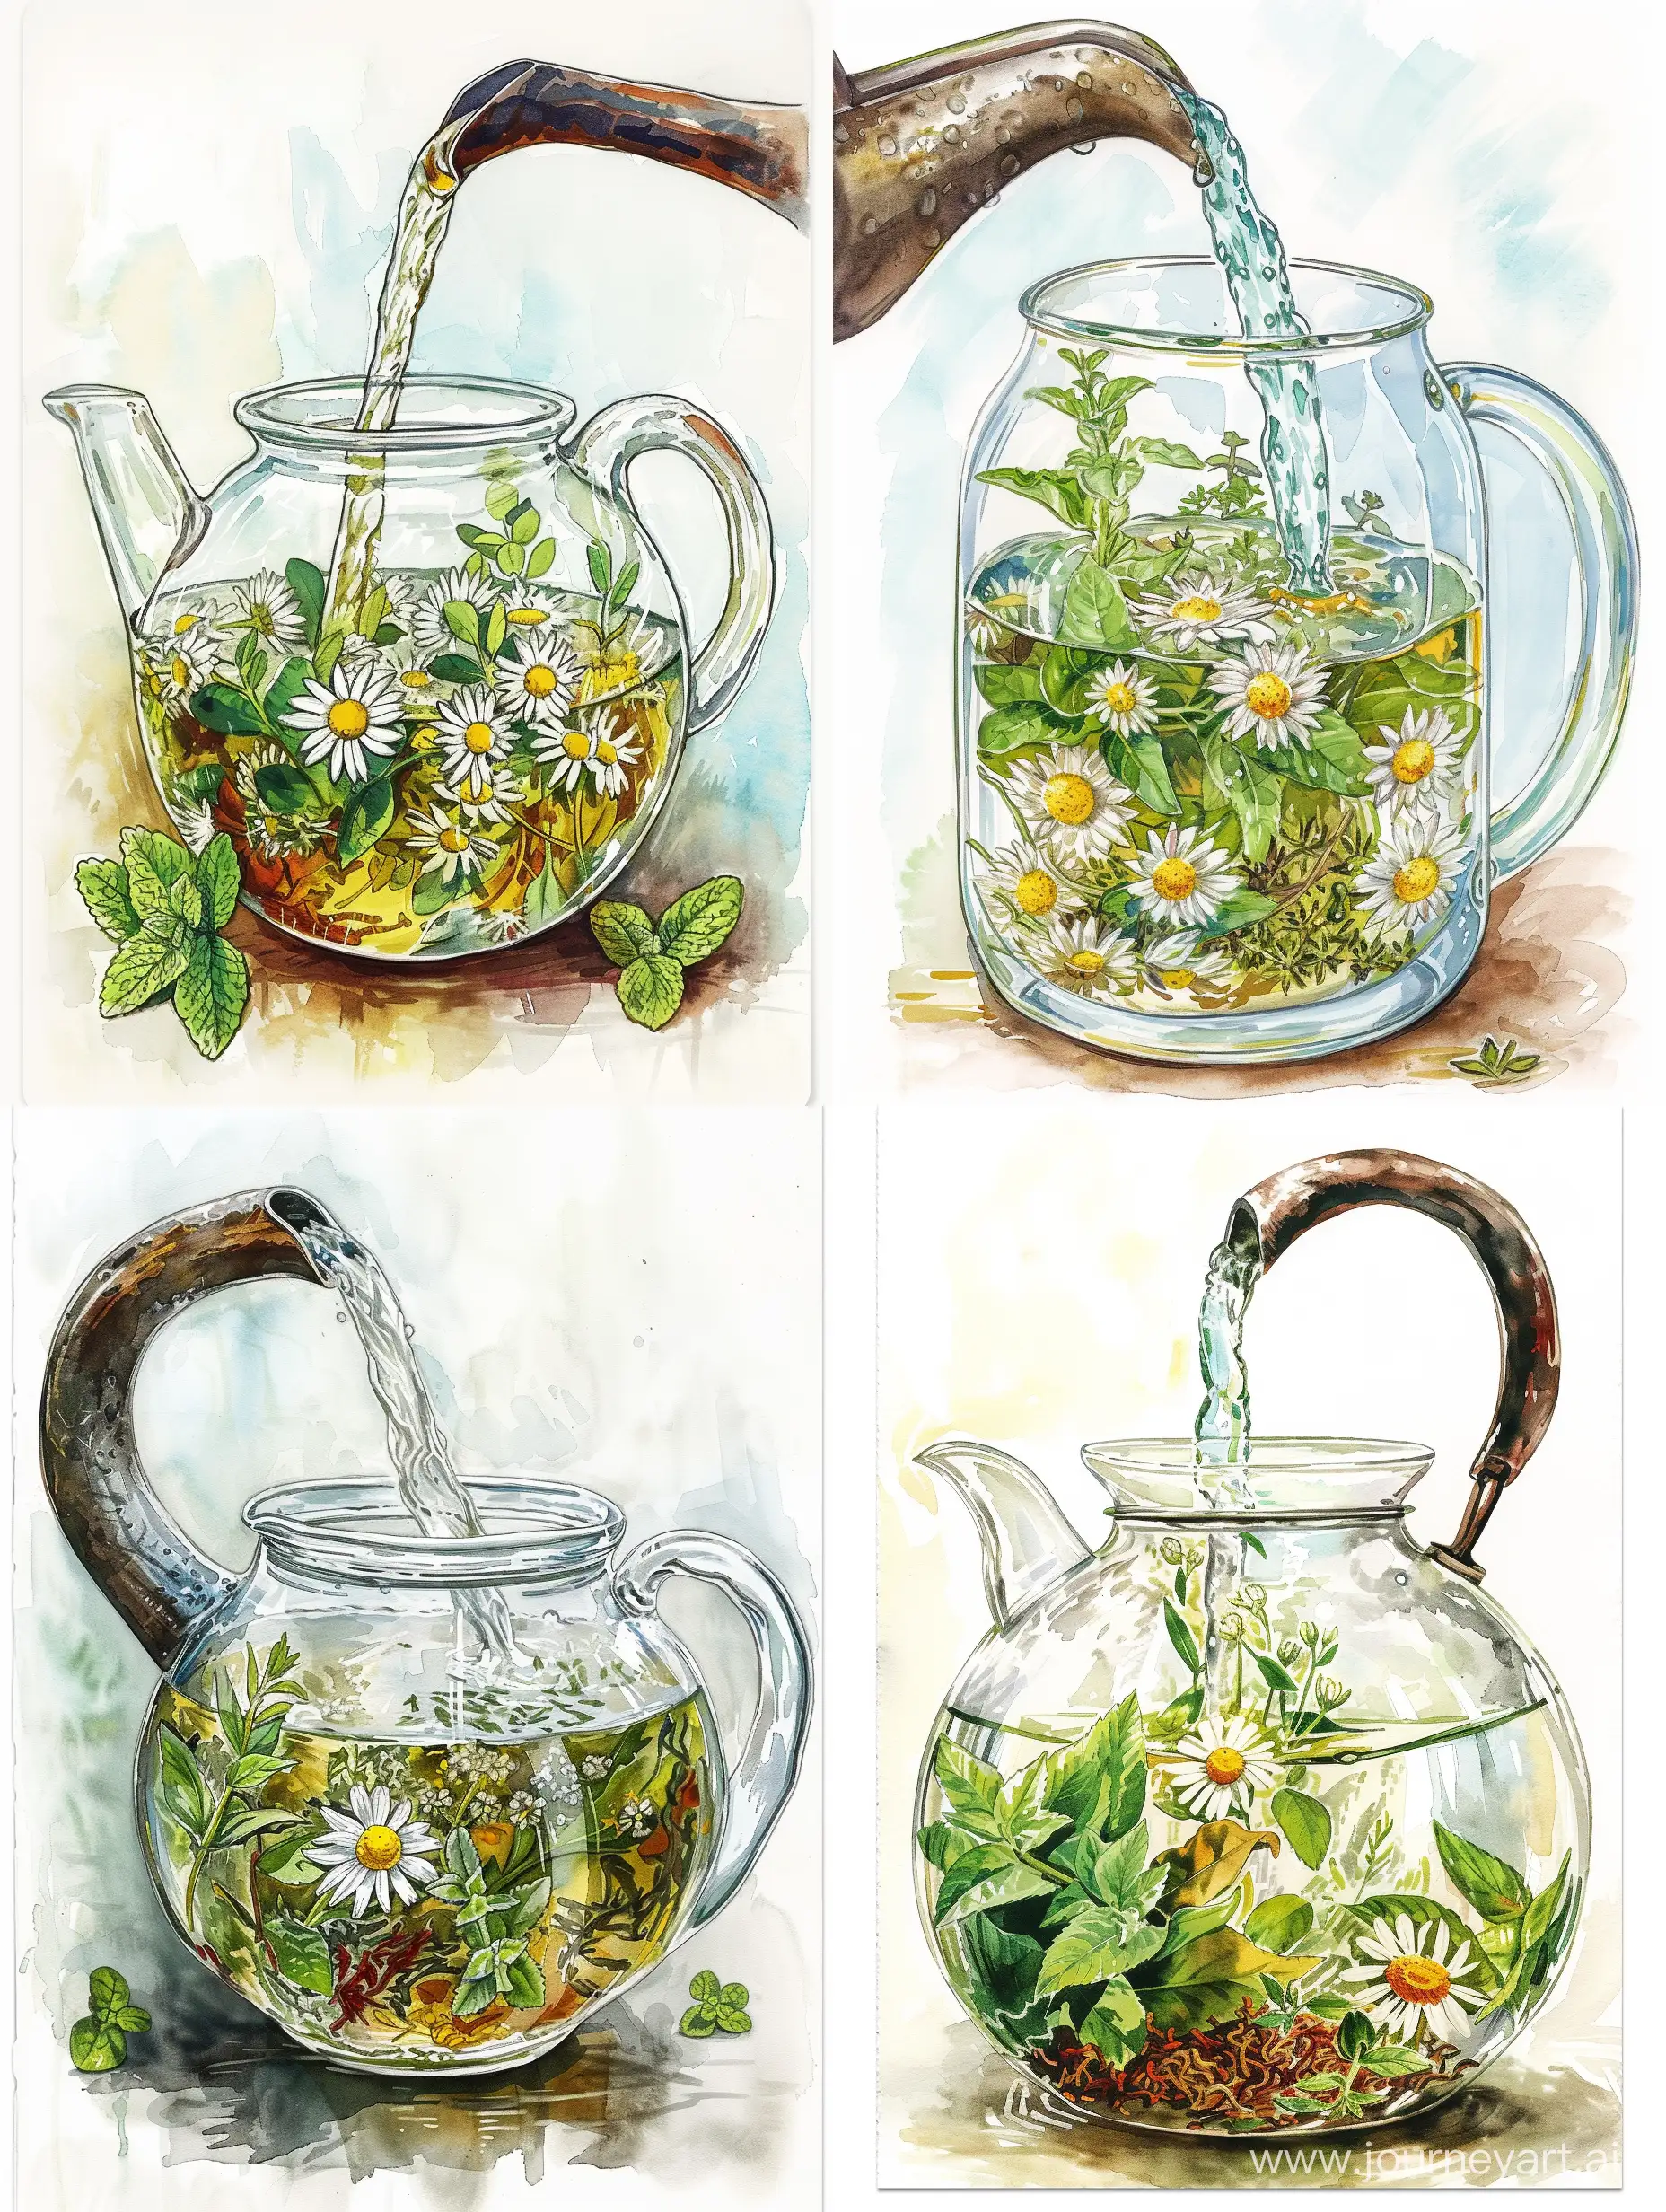 Herbal-Tea-Day-Celebration-Glass-Teapot-with-Chamomile-Ivantea-Tea-Leaves-and-Mint